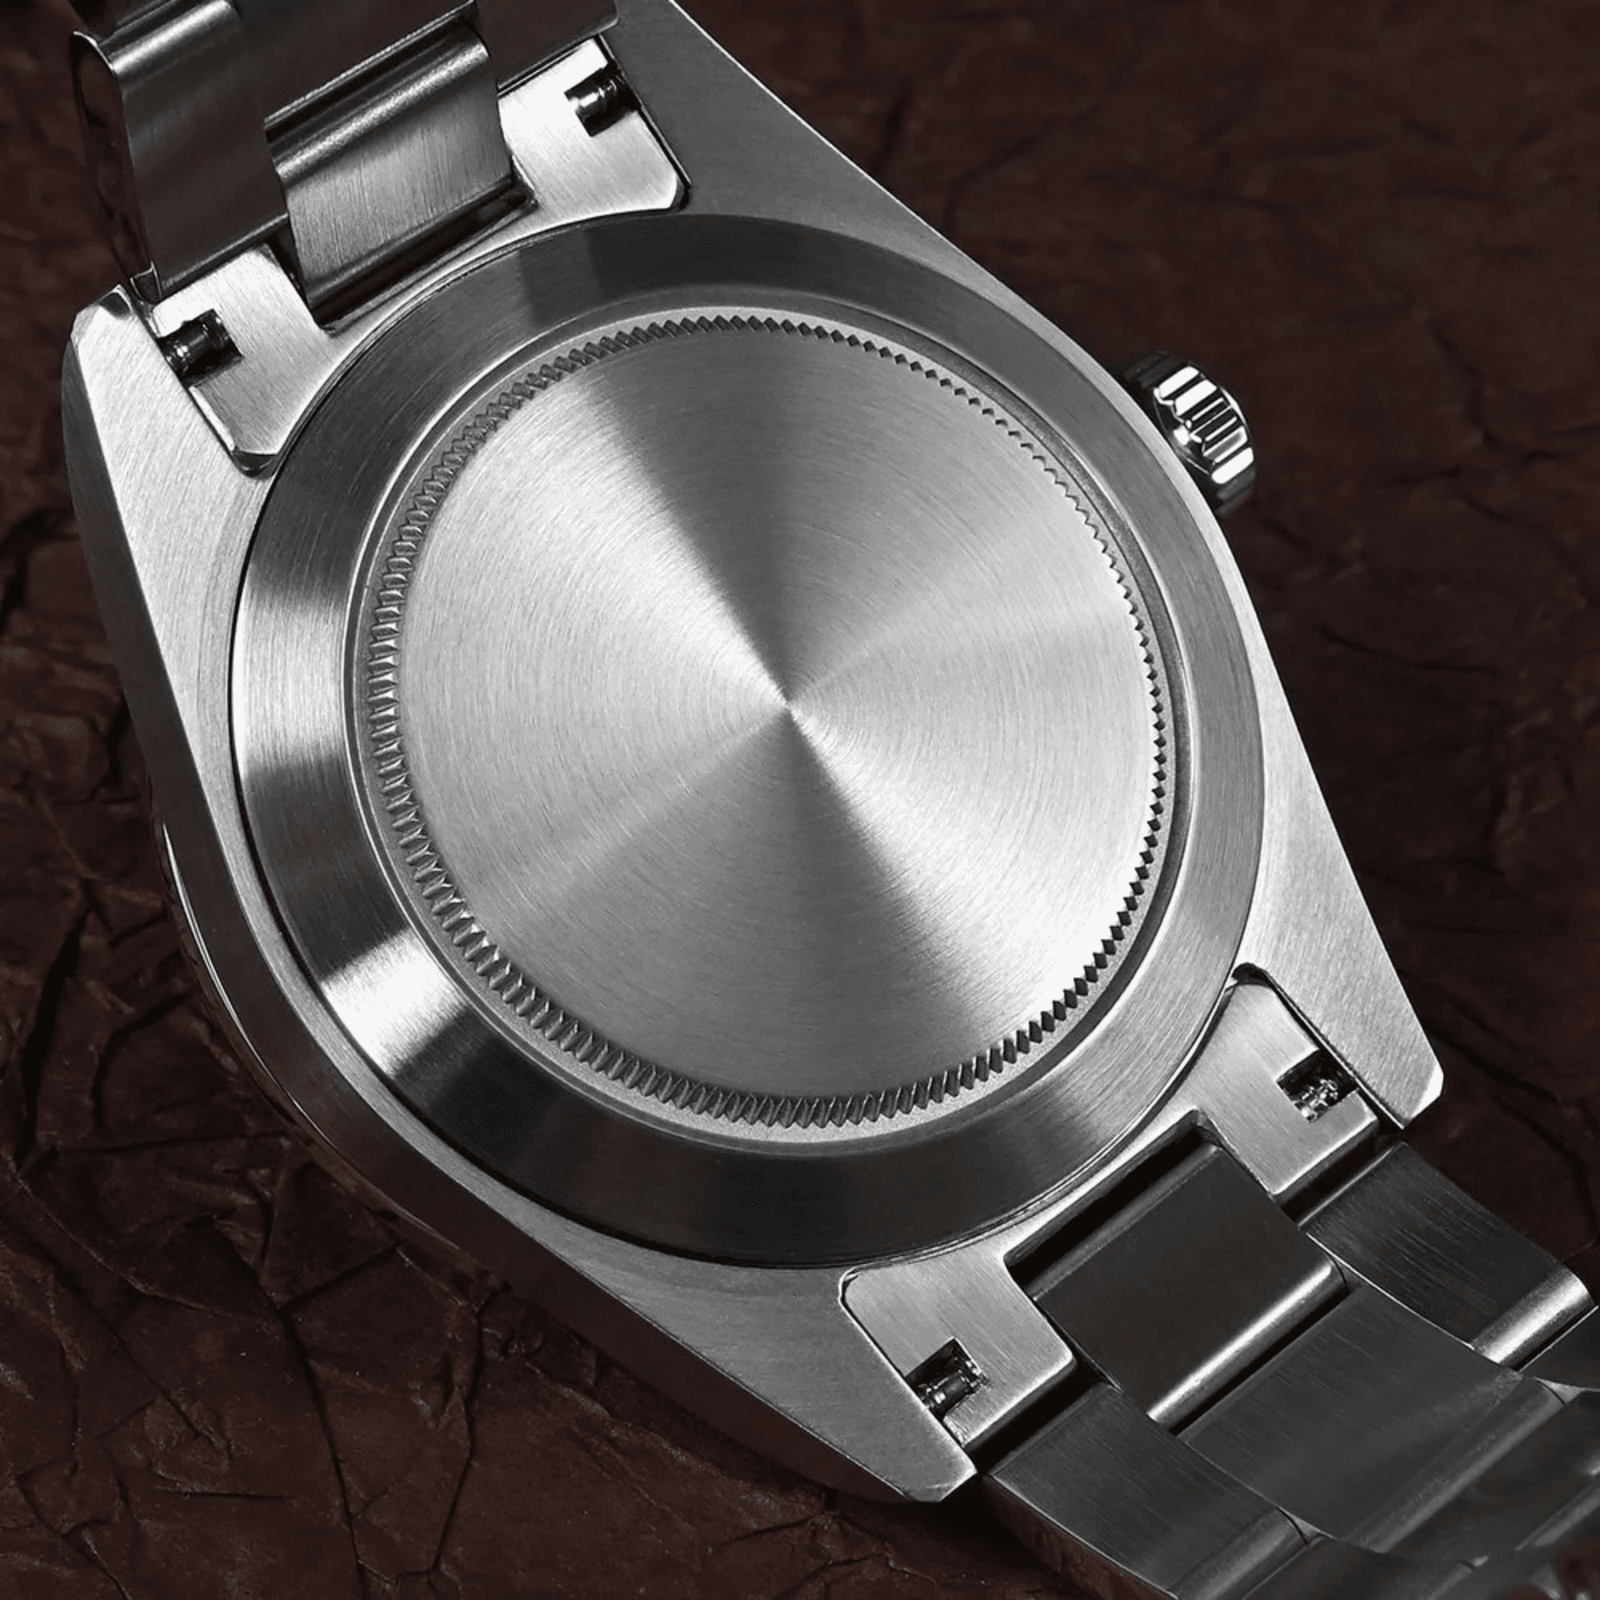 San Martin NH34 39mm BB GMT Watch SN0054GB - White Dial san martin watches india online